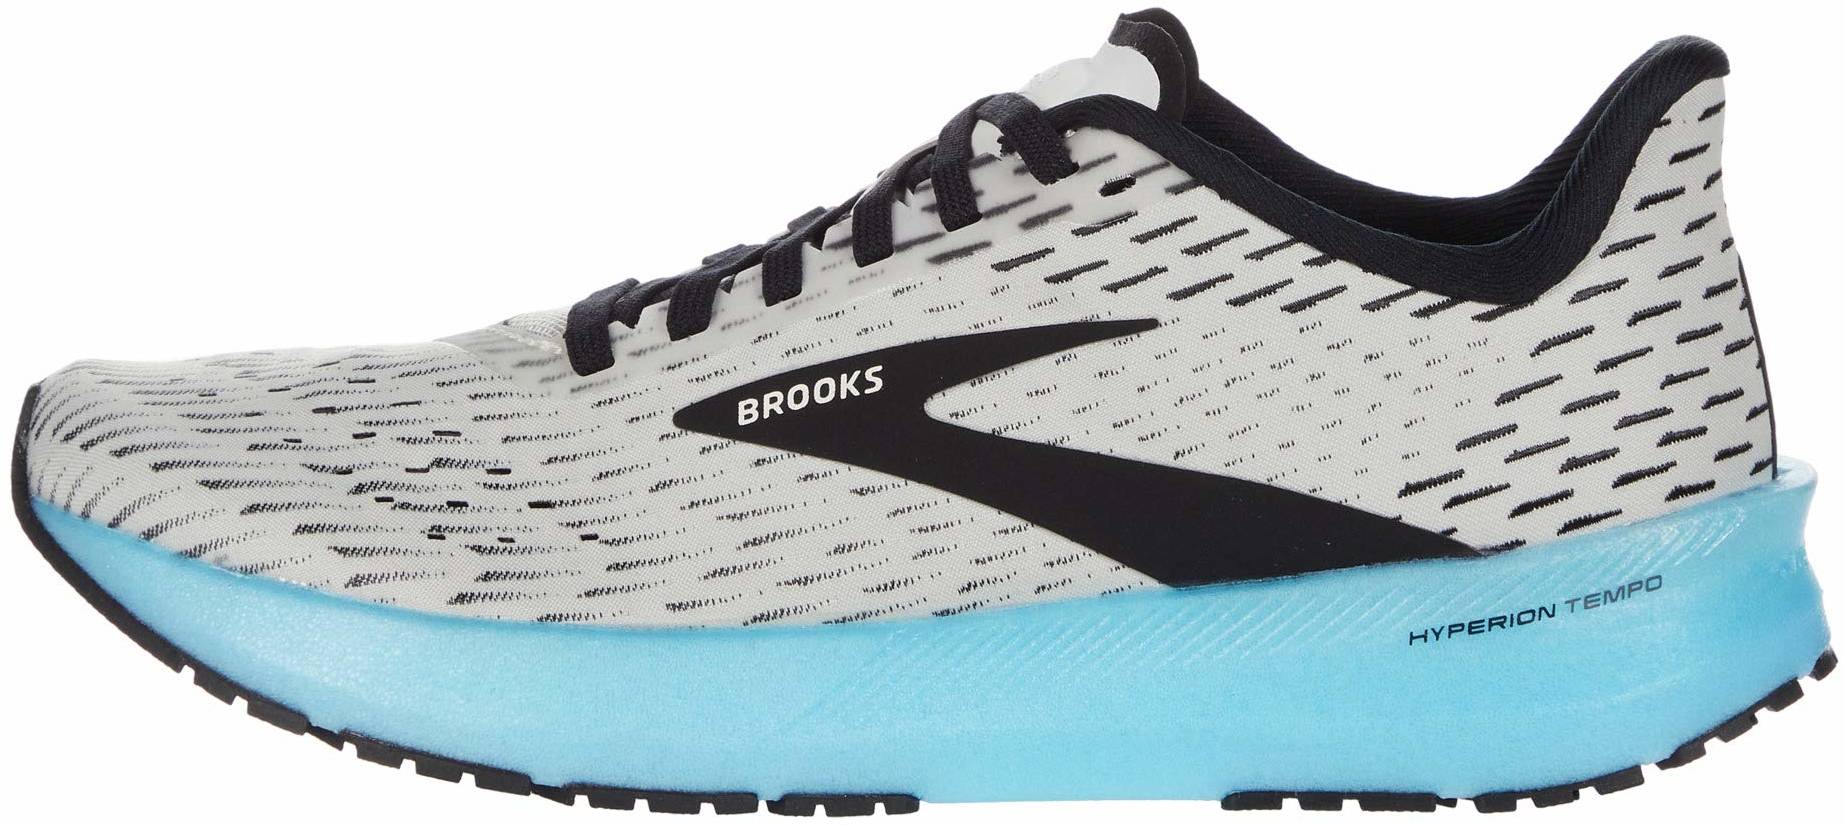 lightest brooks running shoes